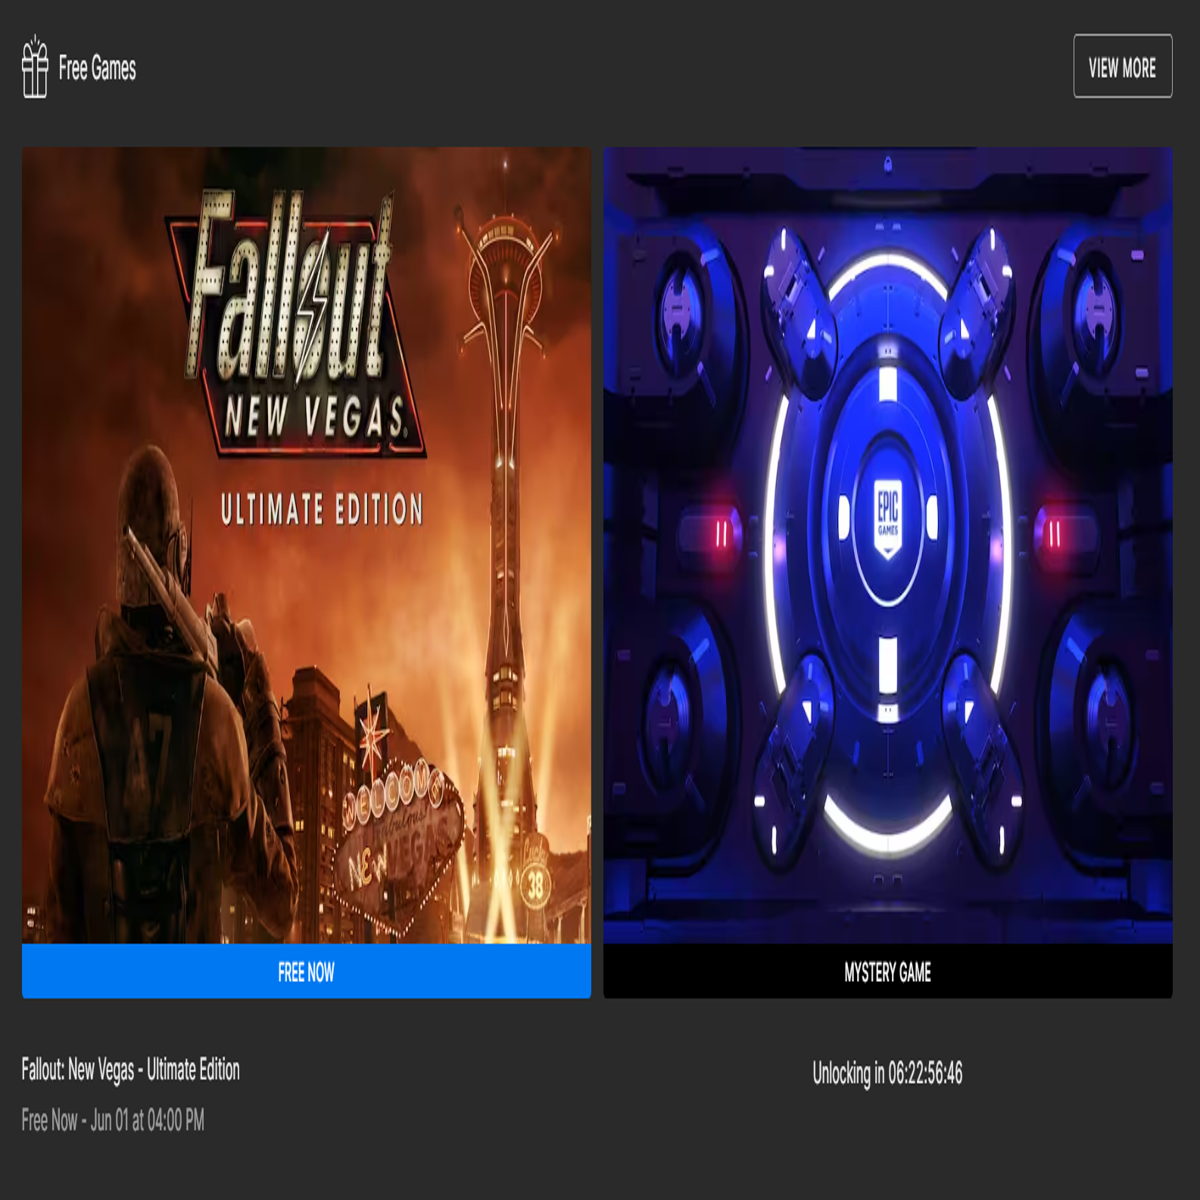 Fallout New Vegas fica grátis na Epic Games Store; veja requisitos